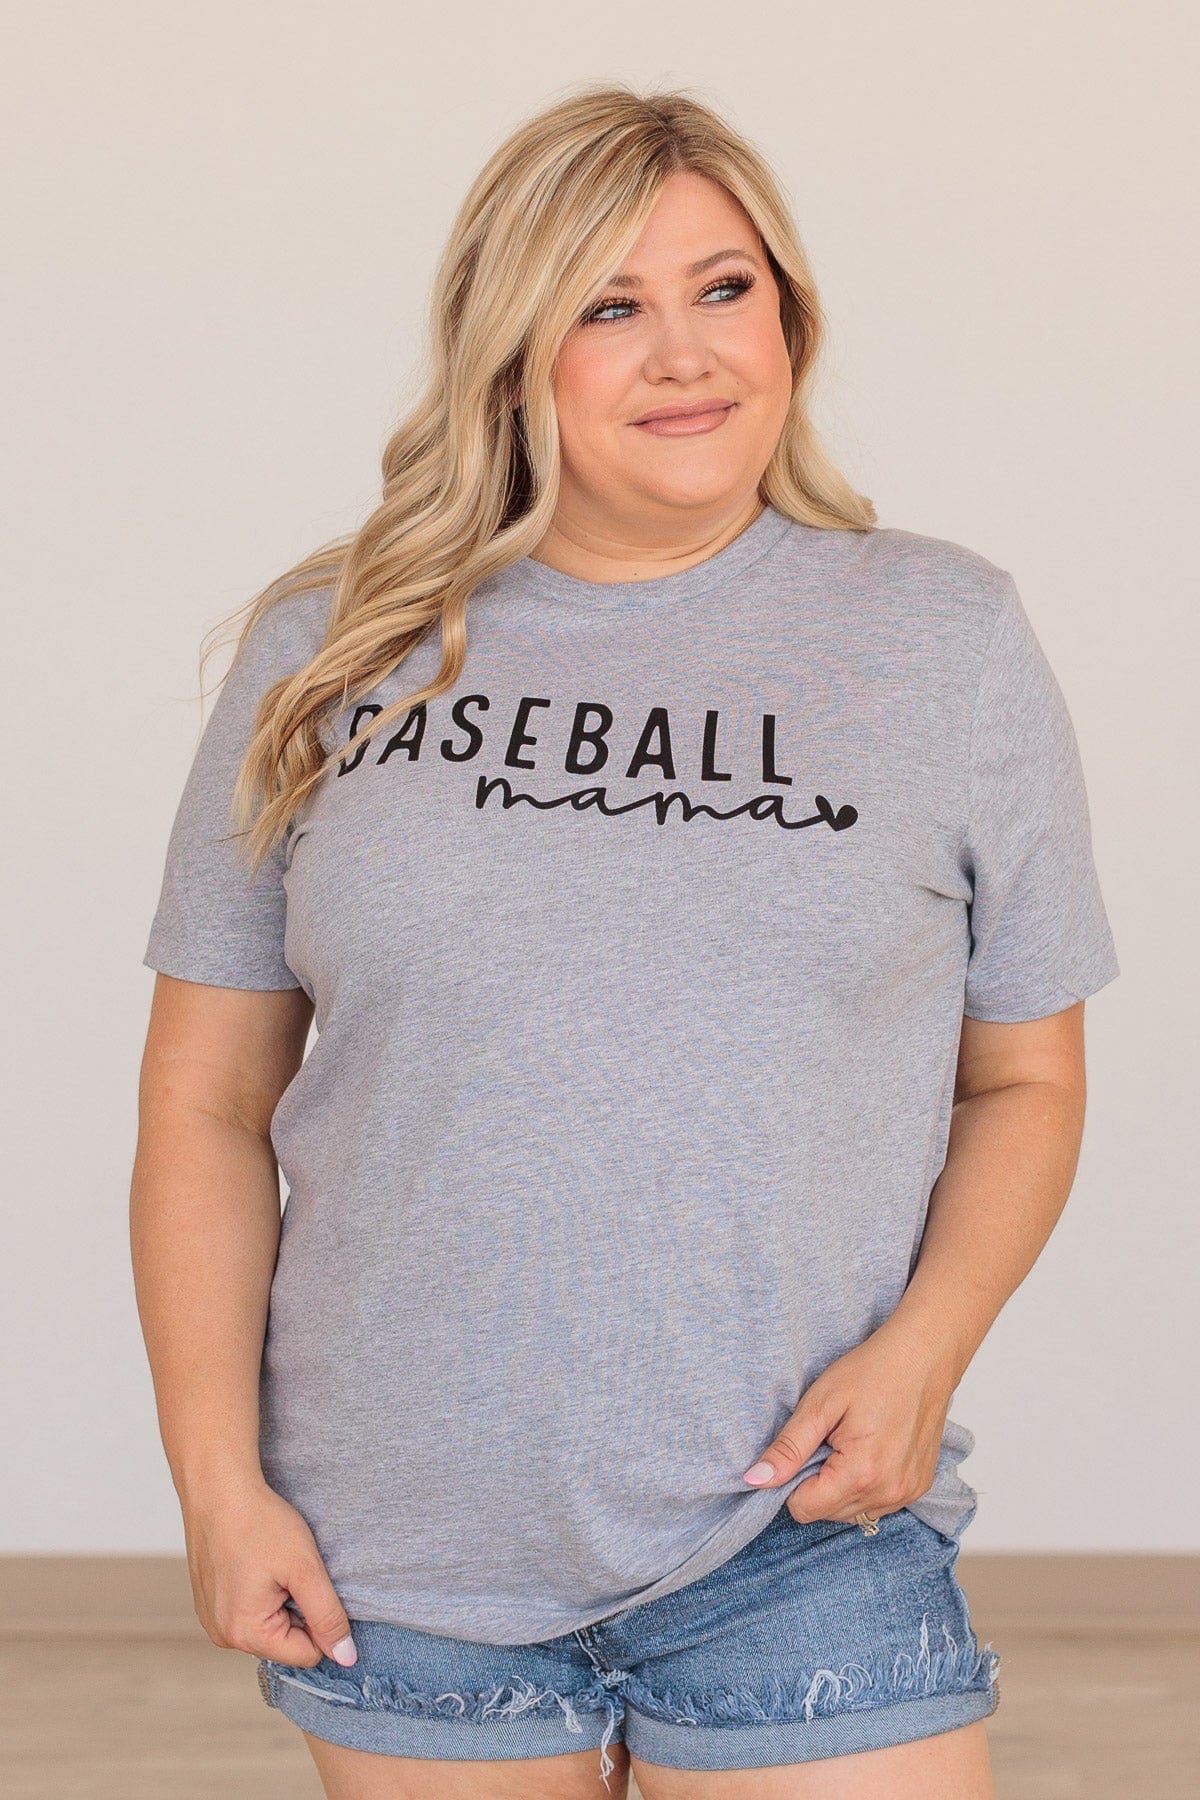 "Baseball Mama" Graphic Tee- Heather Gray